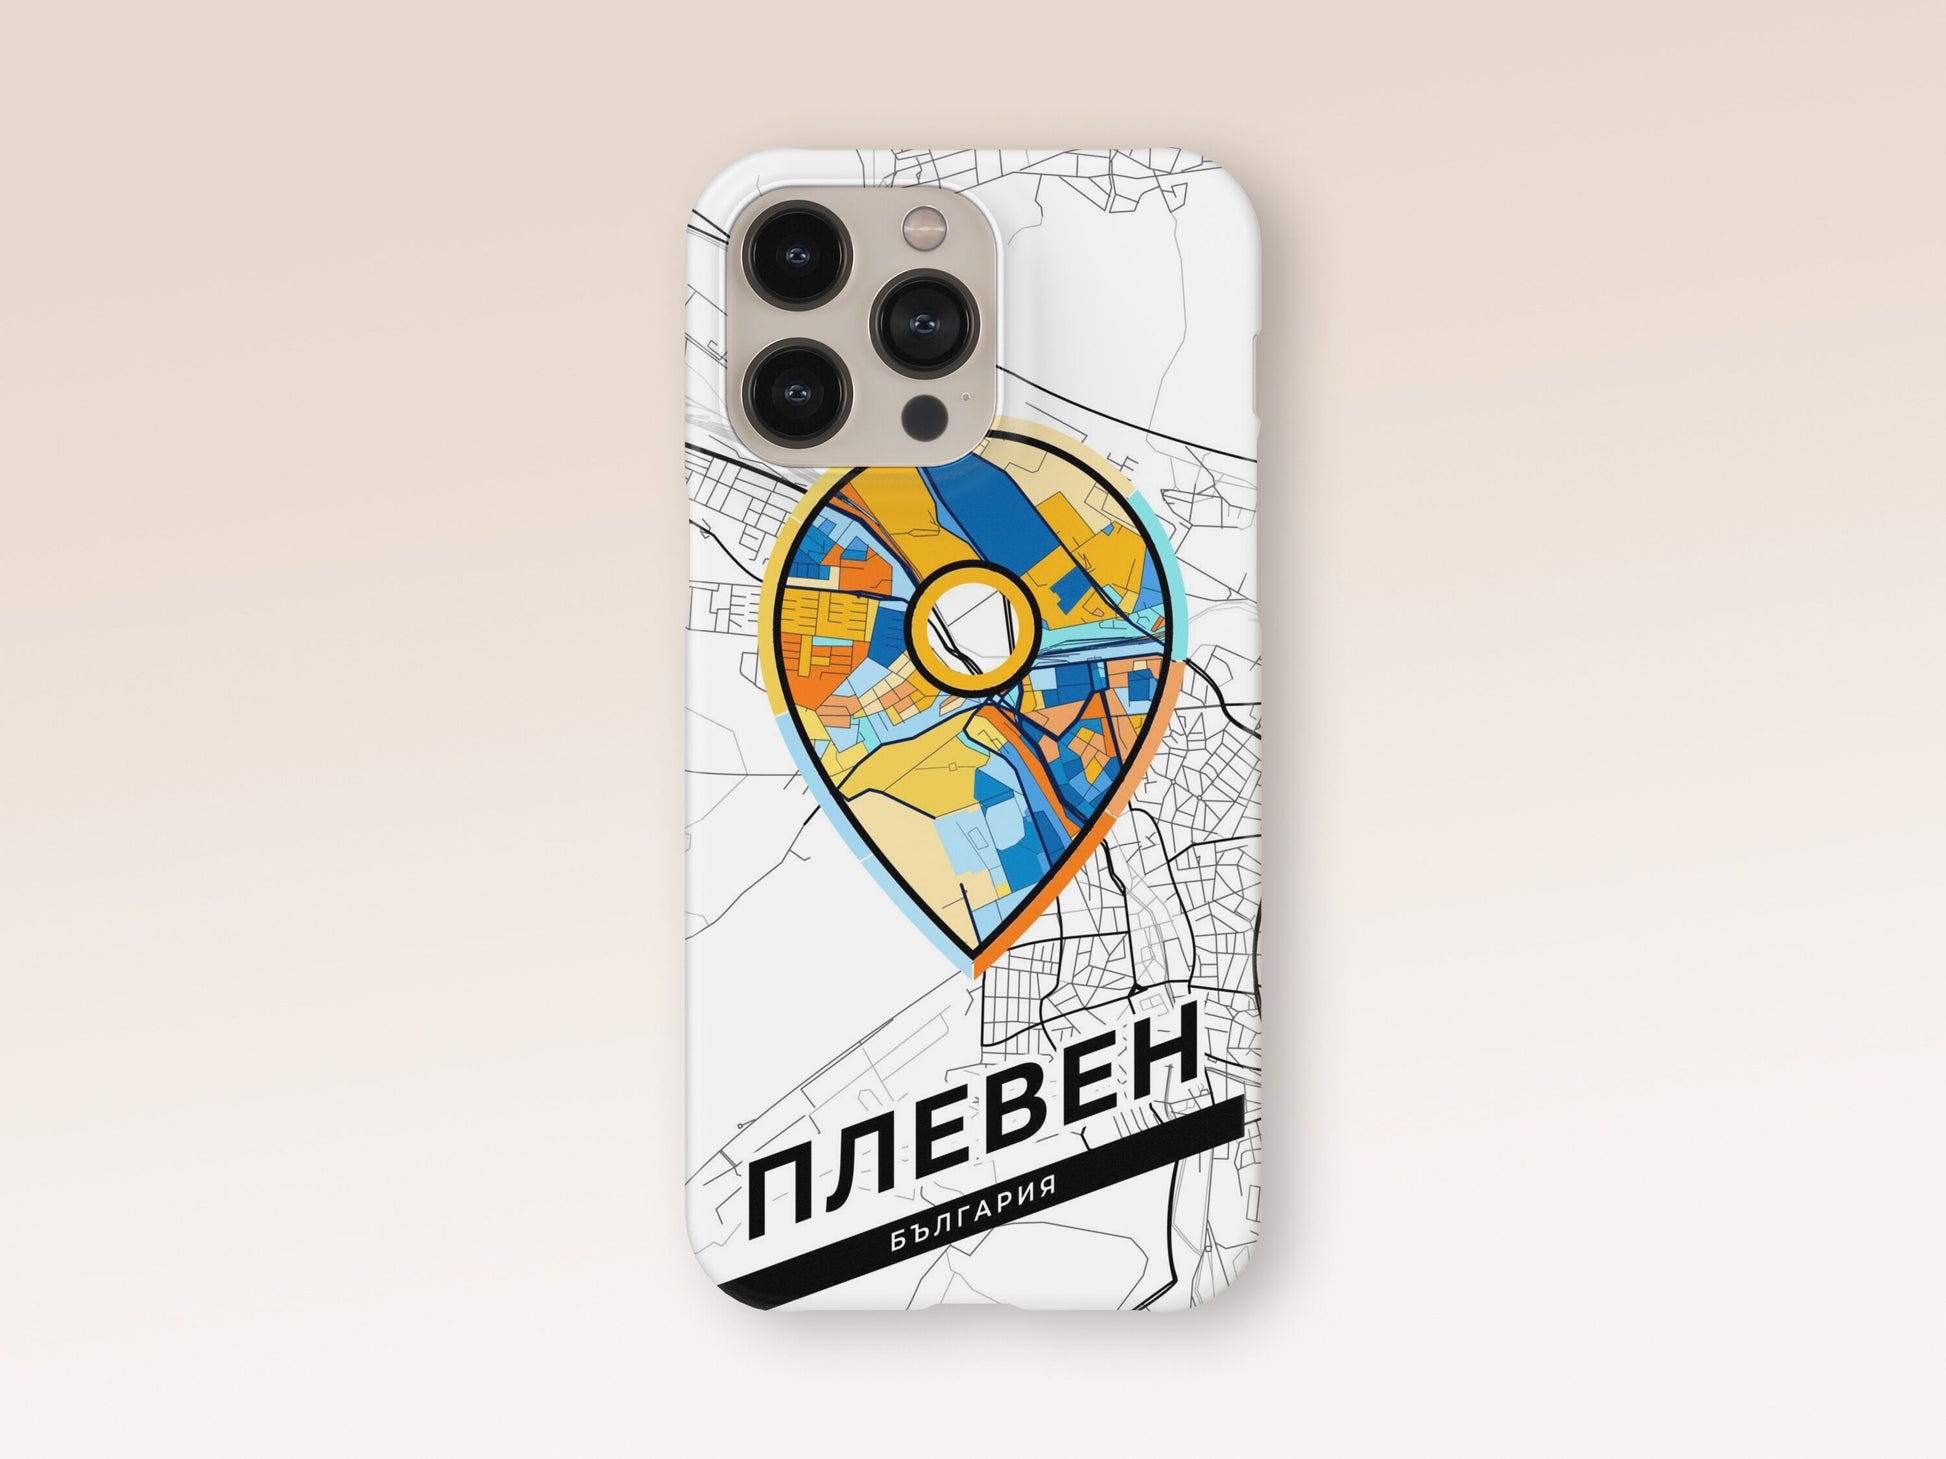 Плевен България slim phone case with colorful icon 1